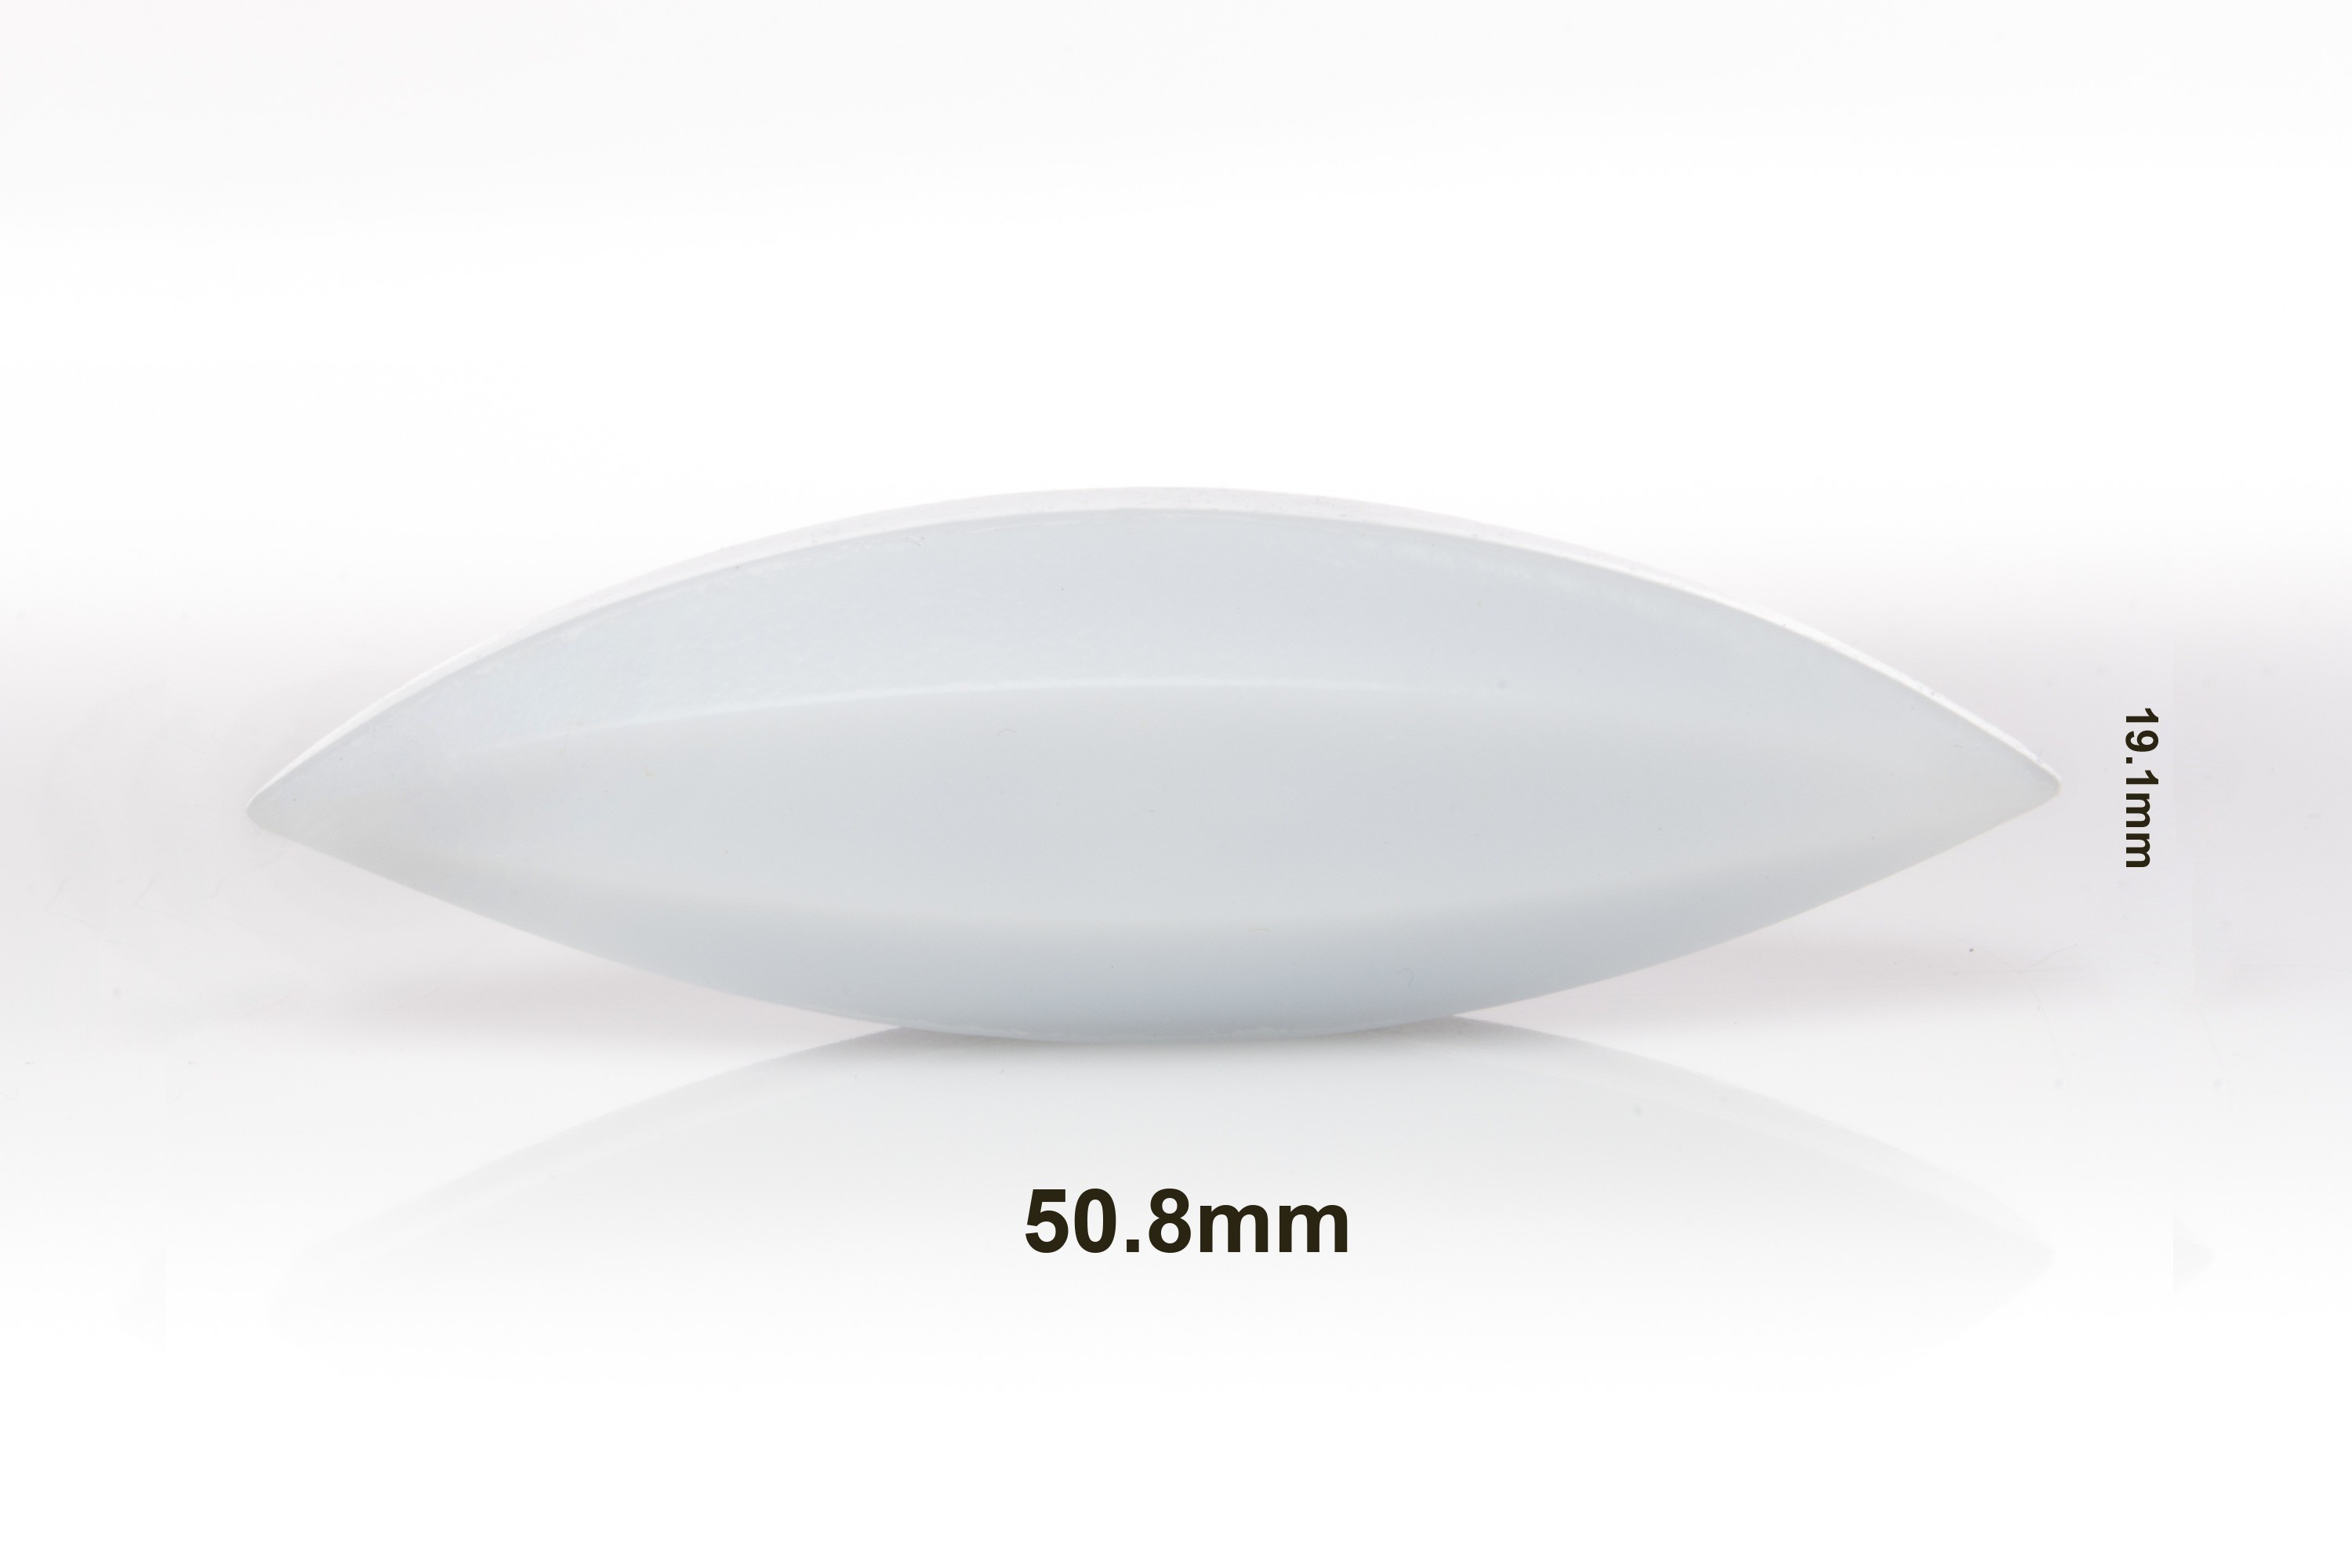 SP Bel-Art Spinbar Teflon Elliptical (Egg-Shaped) Magnetic Stirring Bar; 50.8 x 19.1mm, White